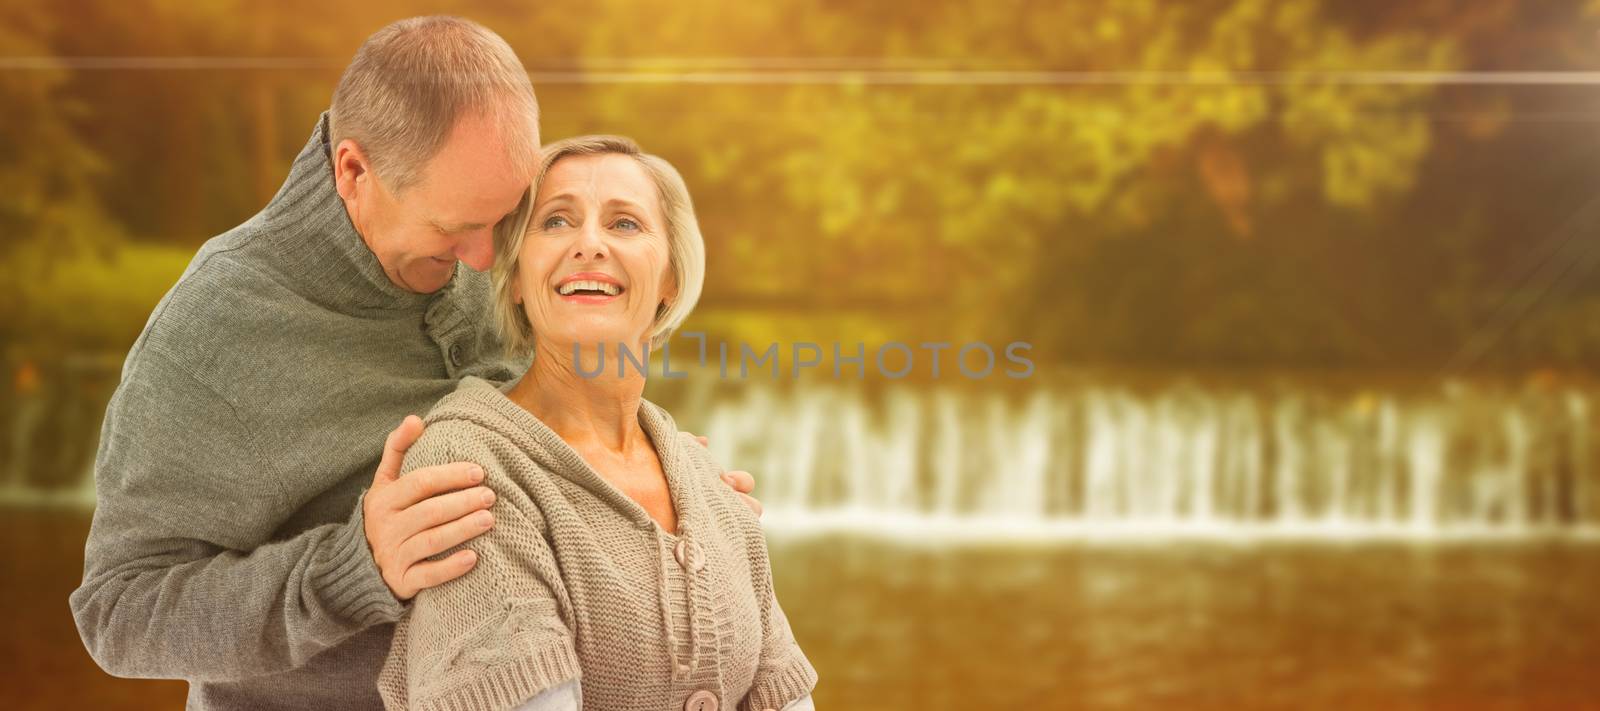 Happy mature couple in winter clothes against autumn scene